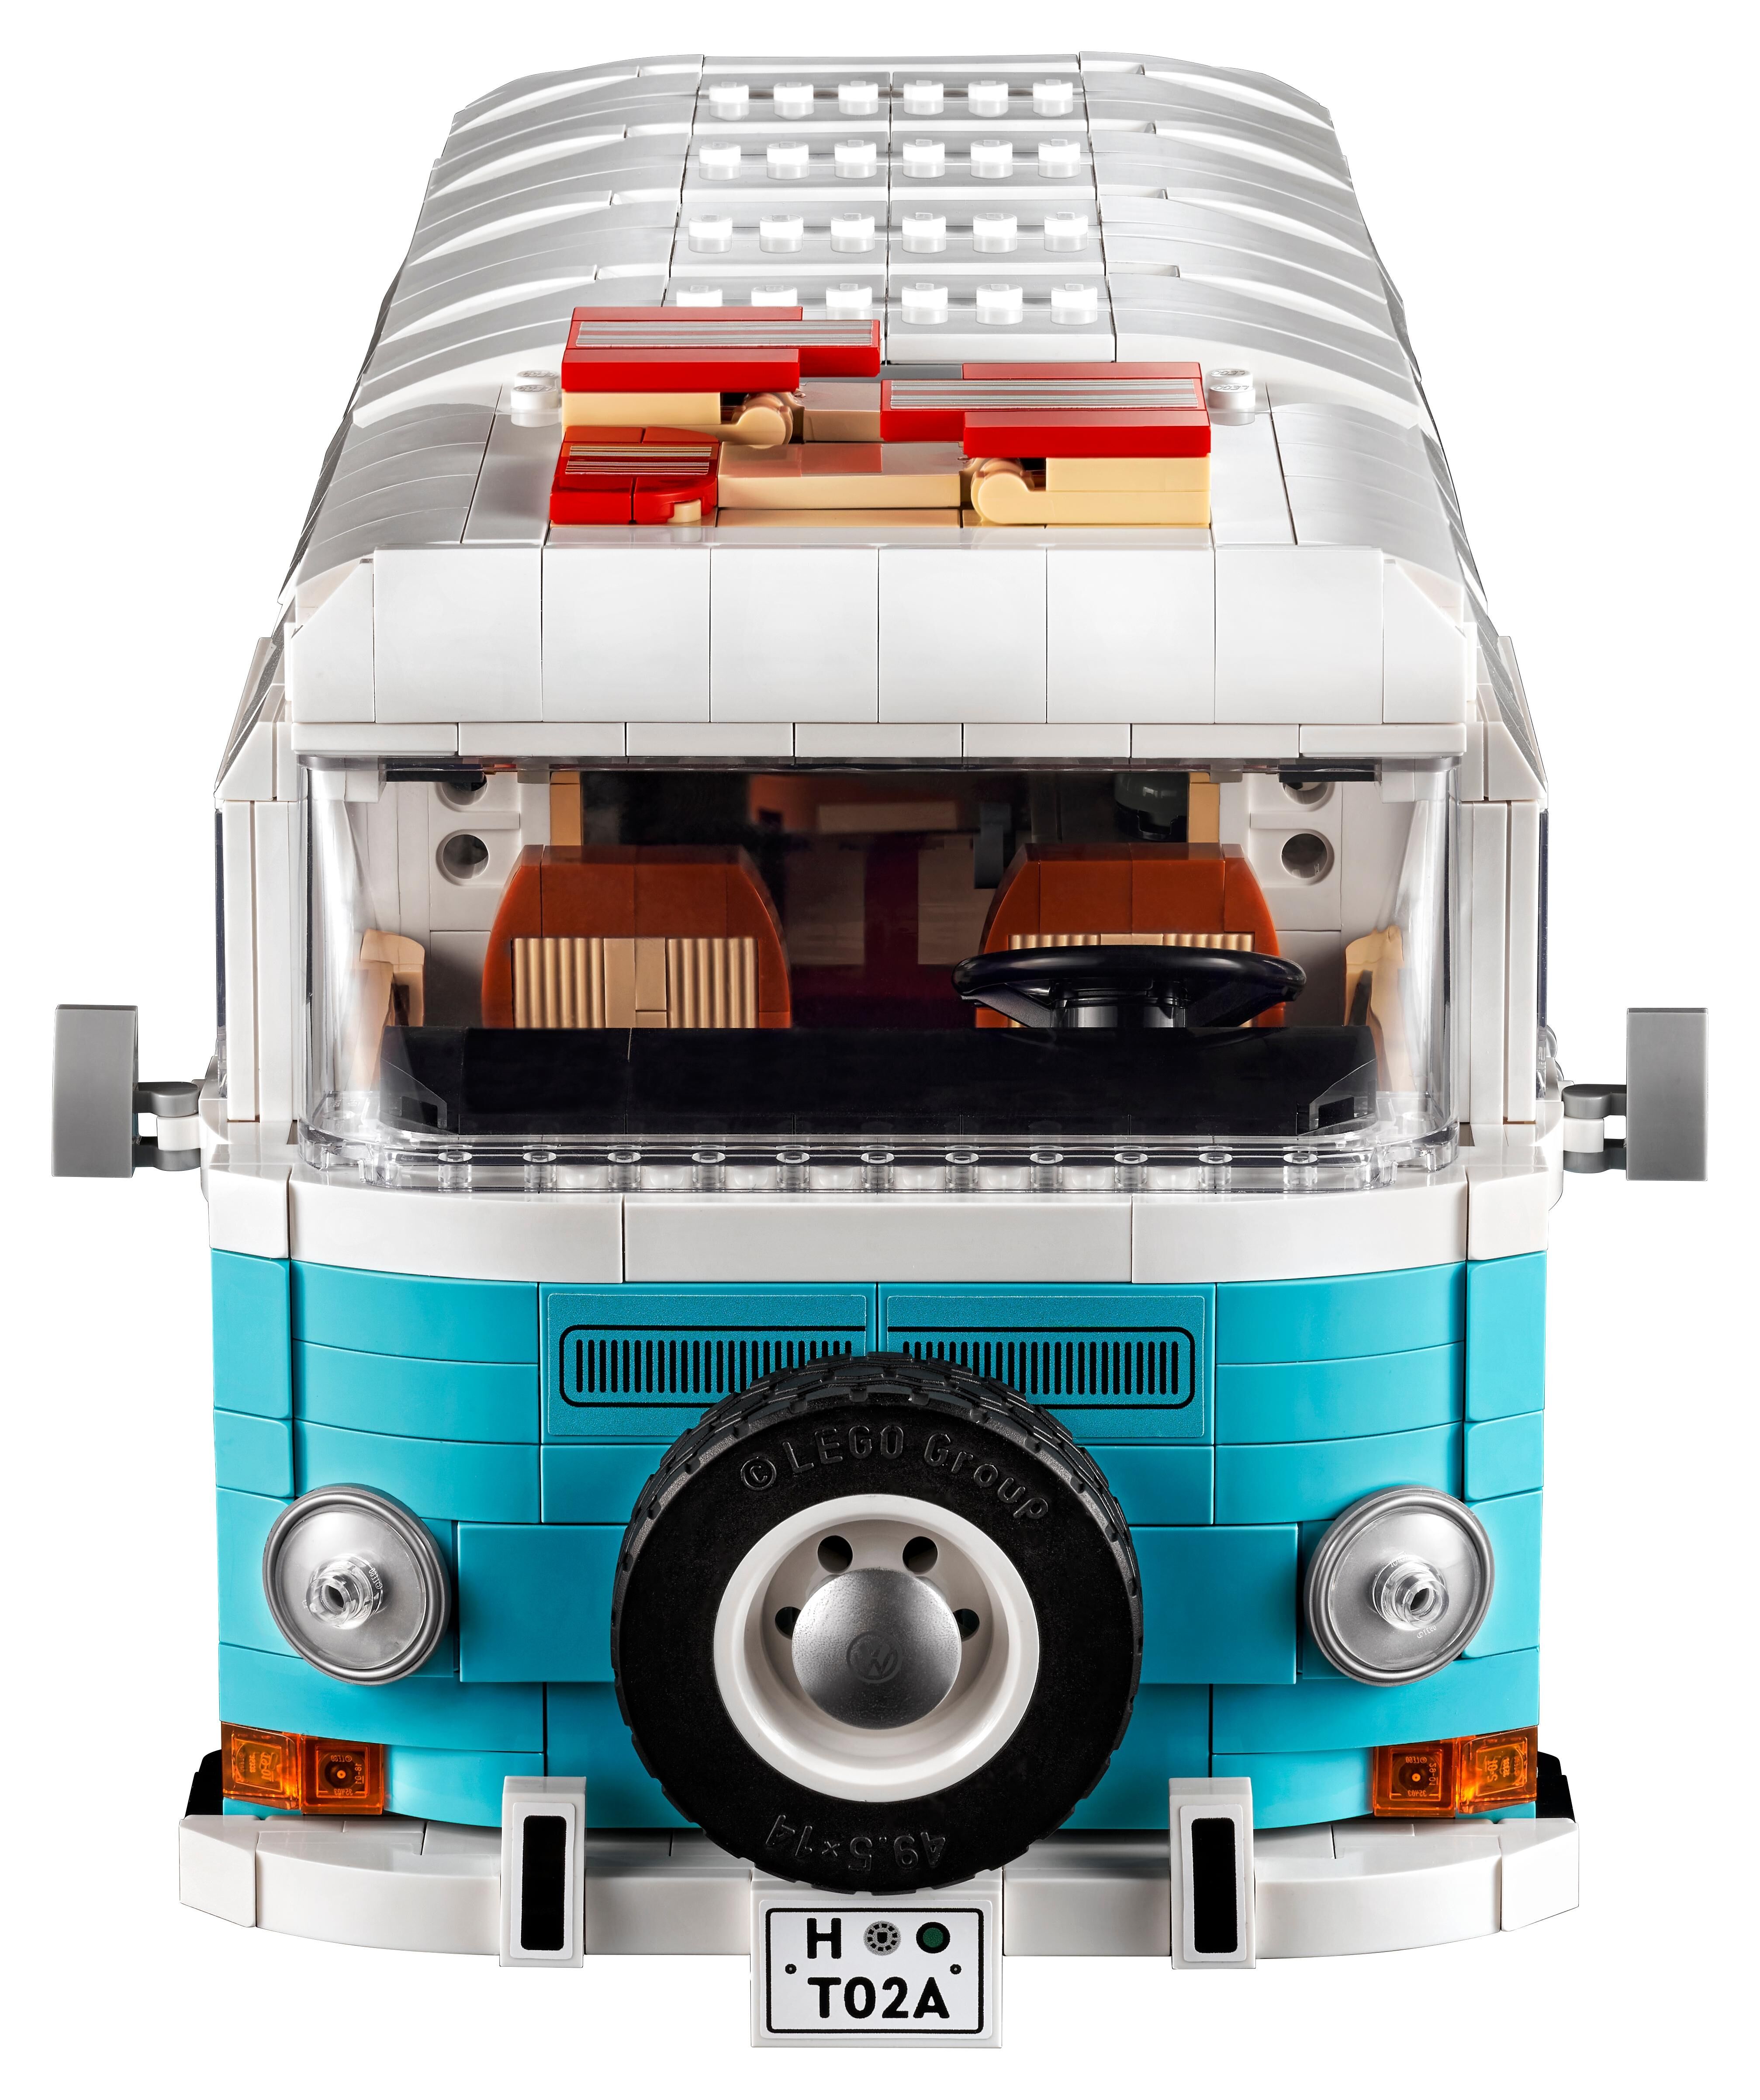 Lego 10279 Creator Expert Le camping-car Volkswagen T2